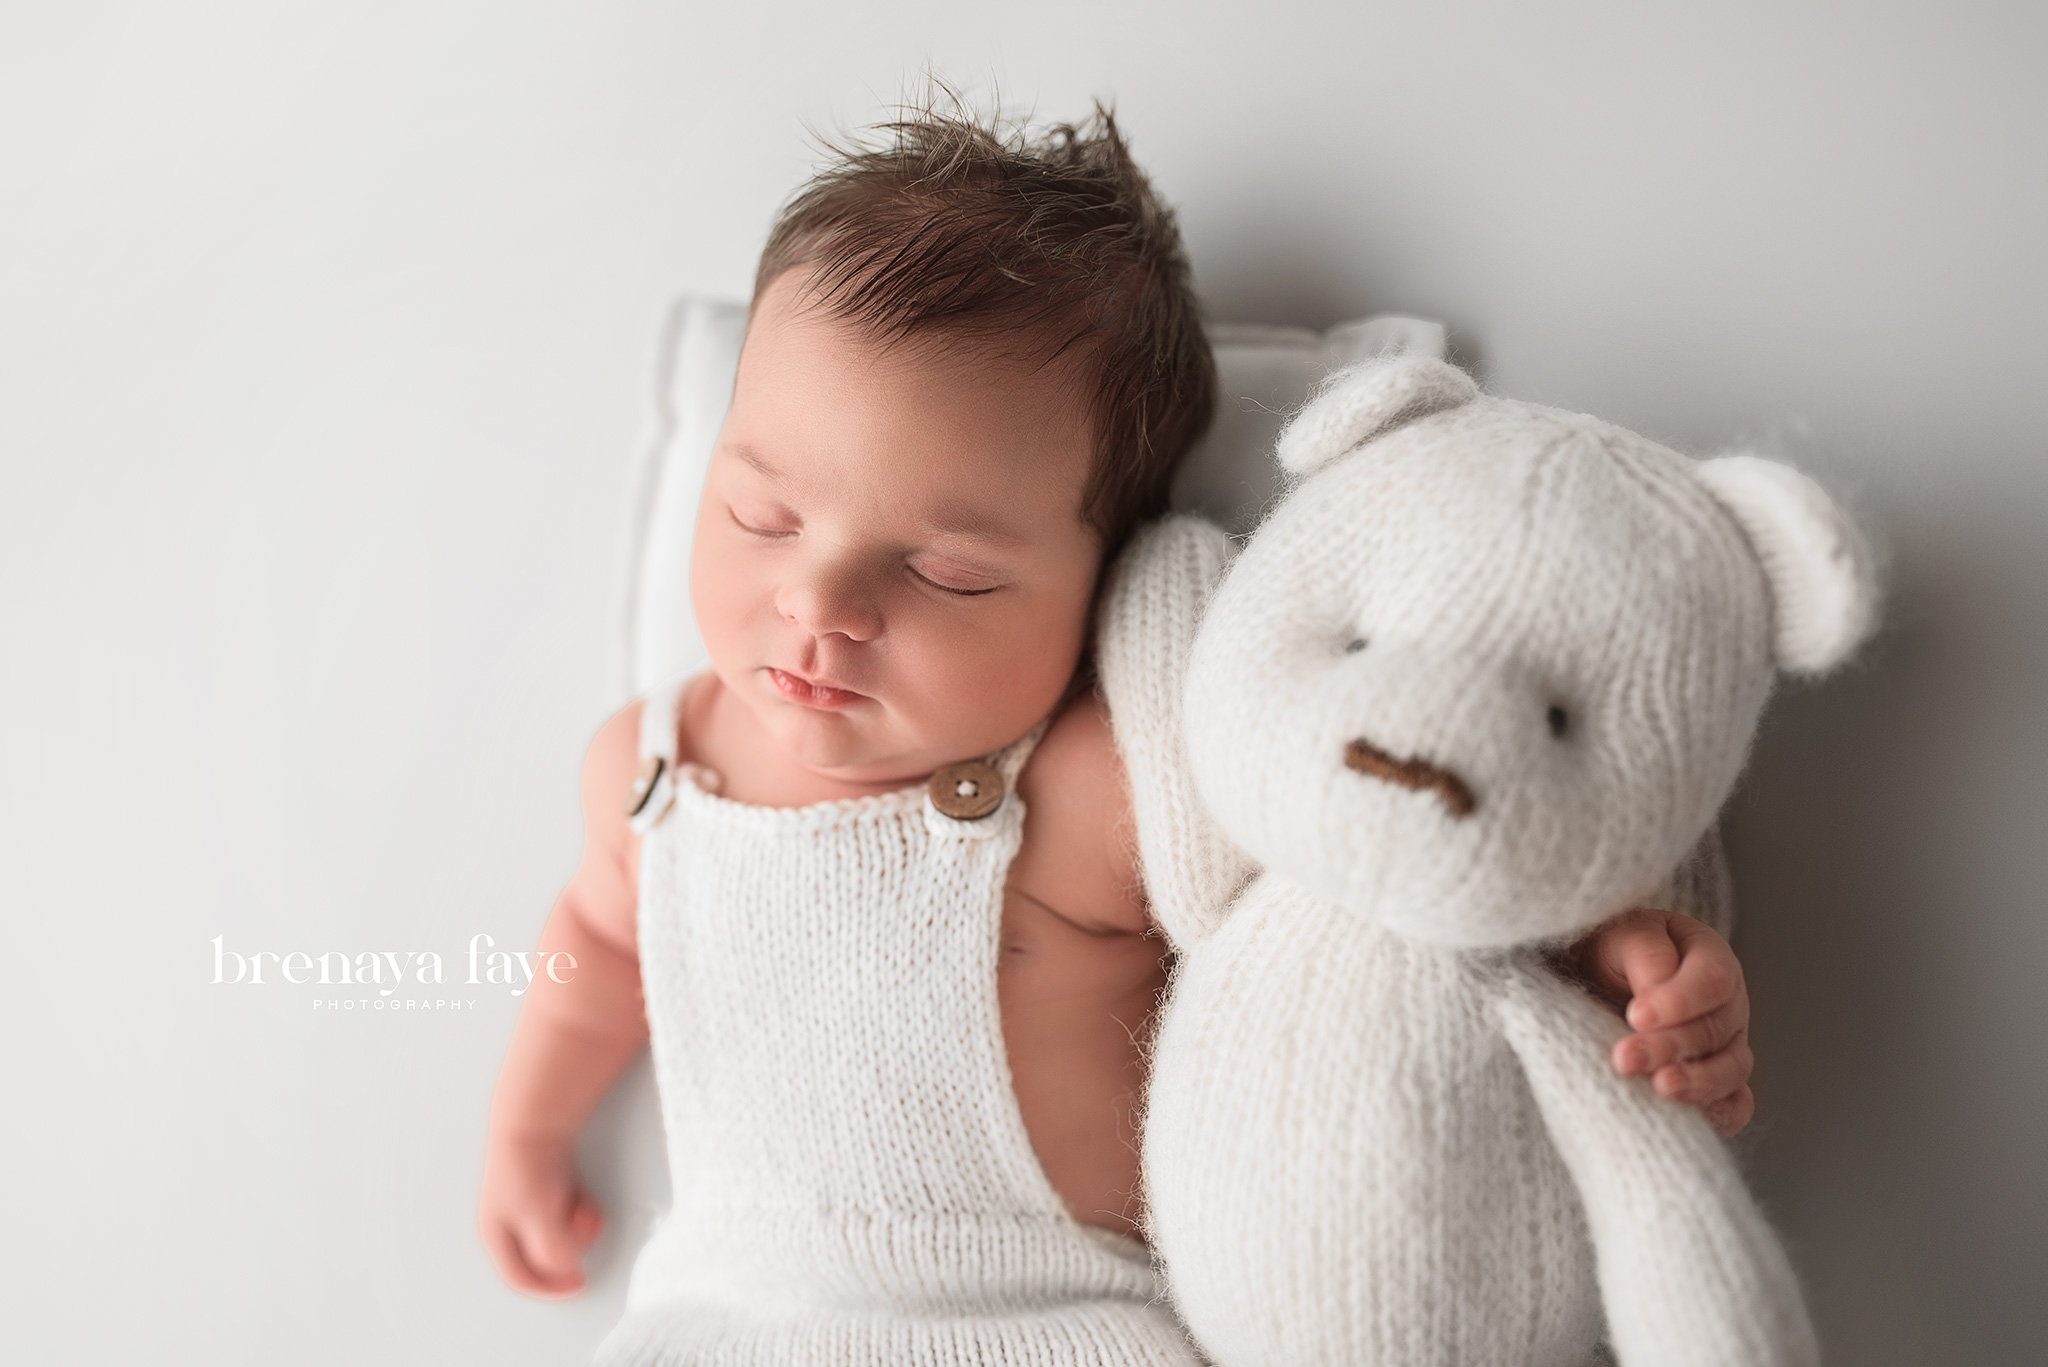 newborn boy posed on white backdrop with bear prop, newborn photography near me, lincoln nebraska photographer